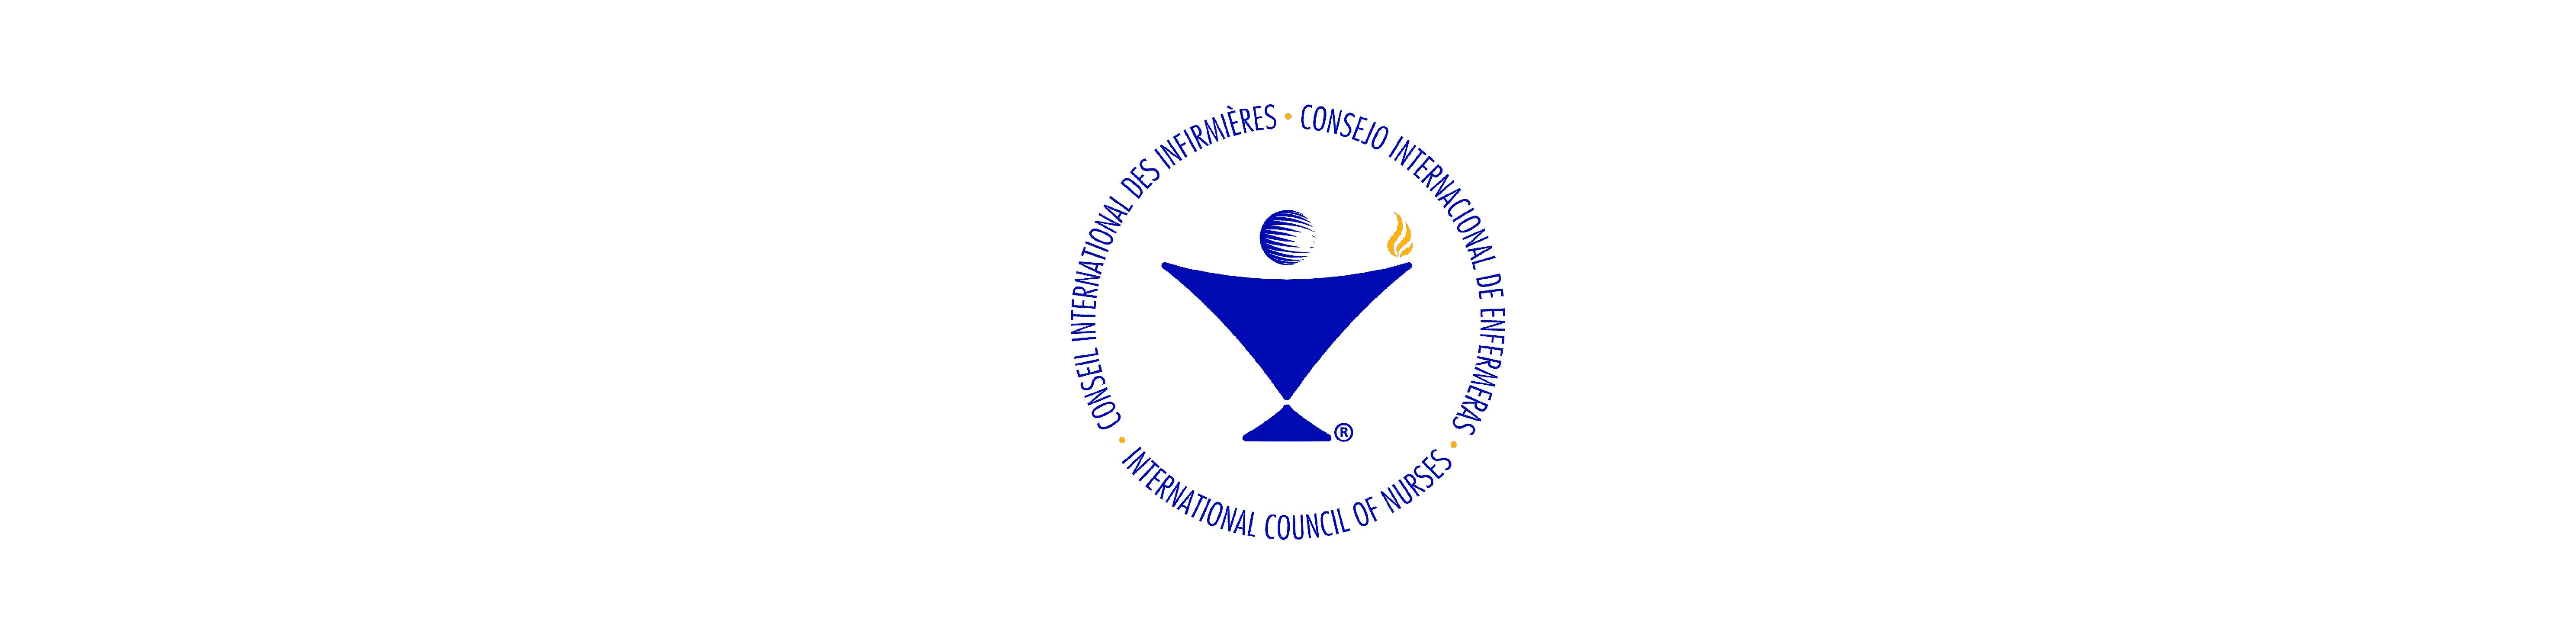 ICN Logo - Canadian Nurses Association to co-host International Council of ...